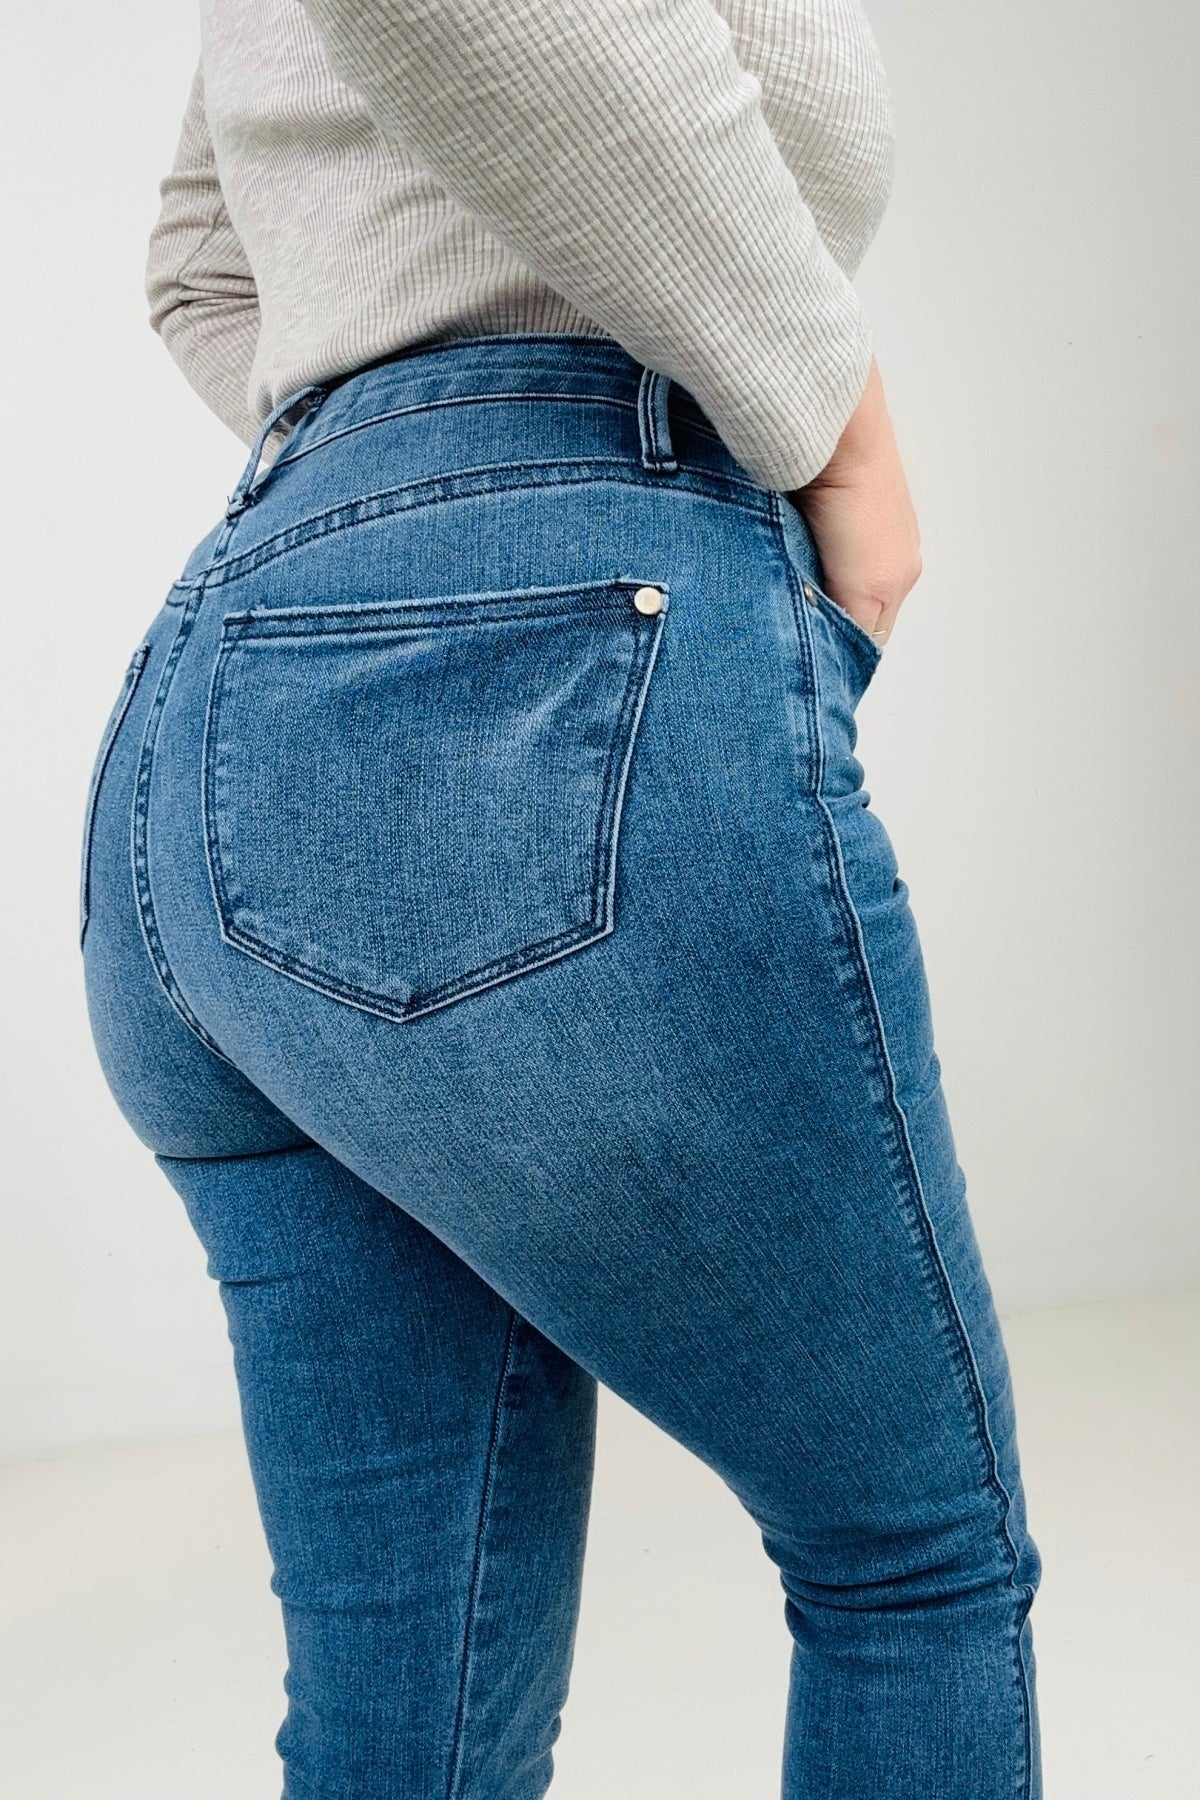 "Cora" Judy Blue High Waist Control Top Cool Denim Skinny Jeans